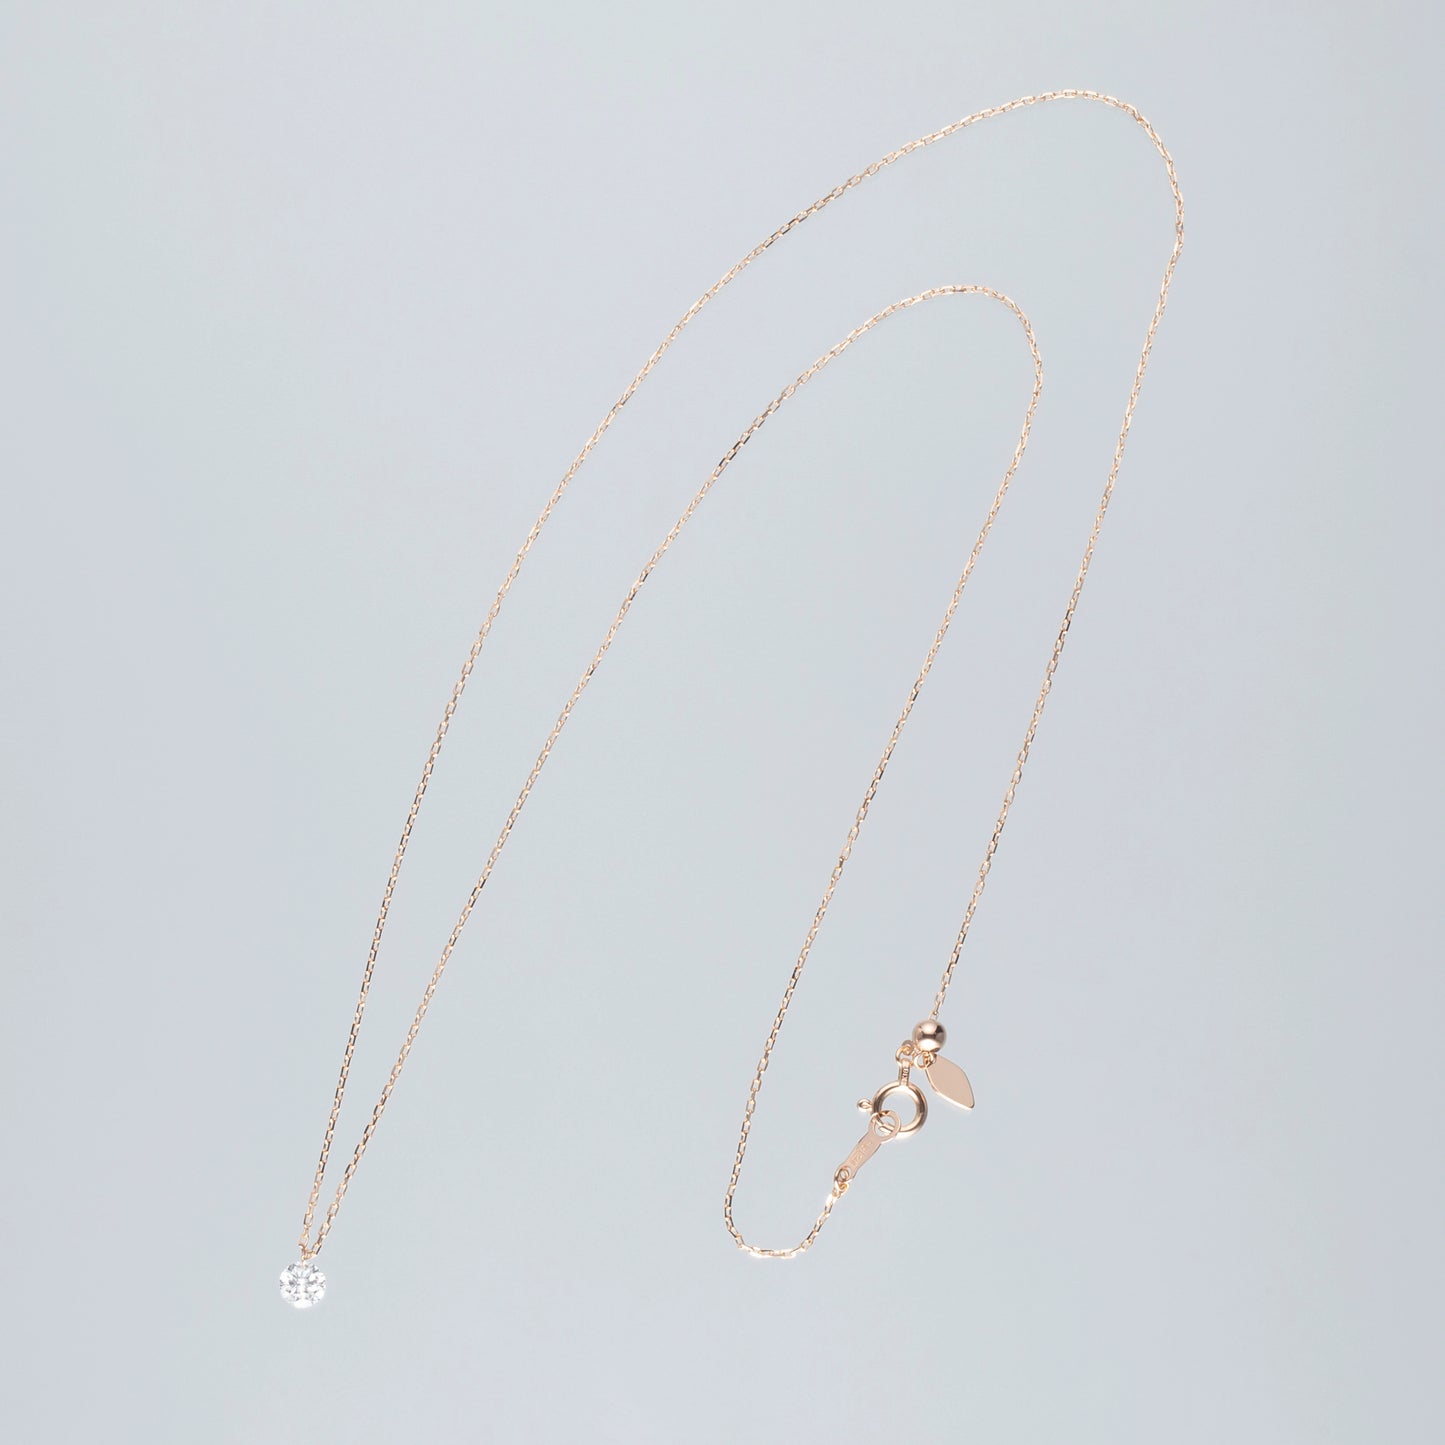 INNOCENCE1 Necklace / K18 Pink gold / 0.1 Carat